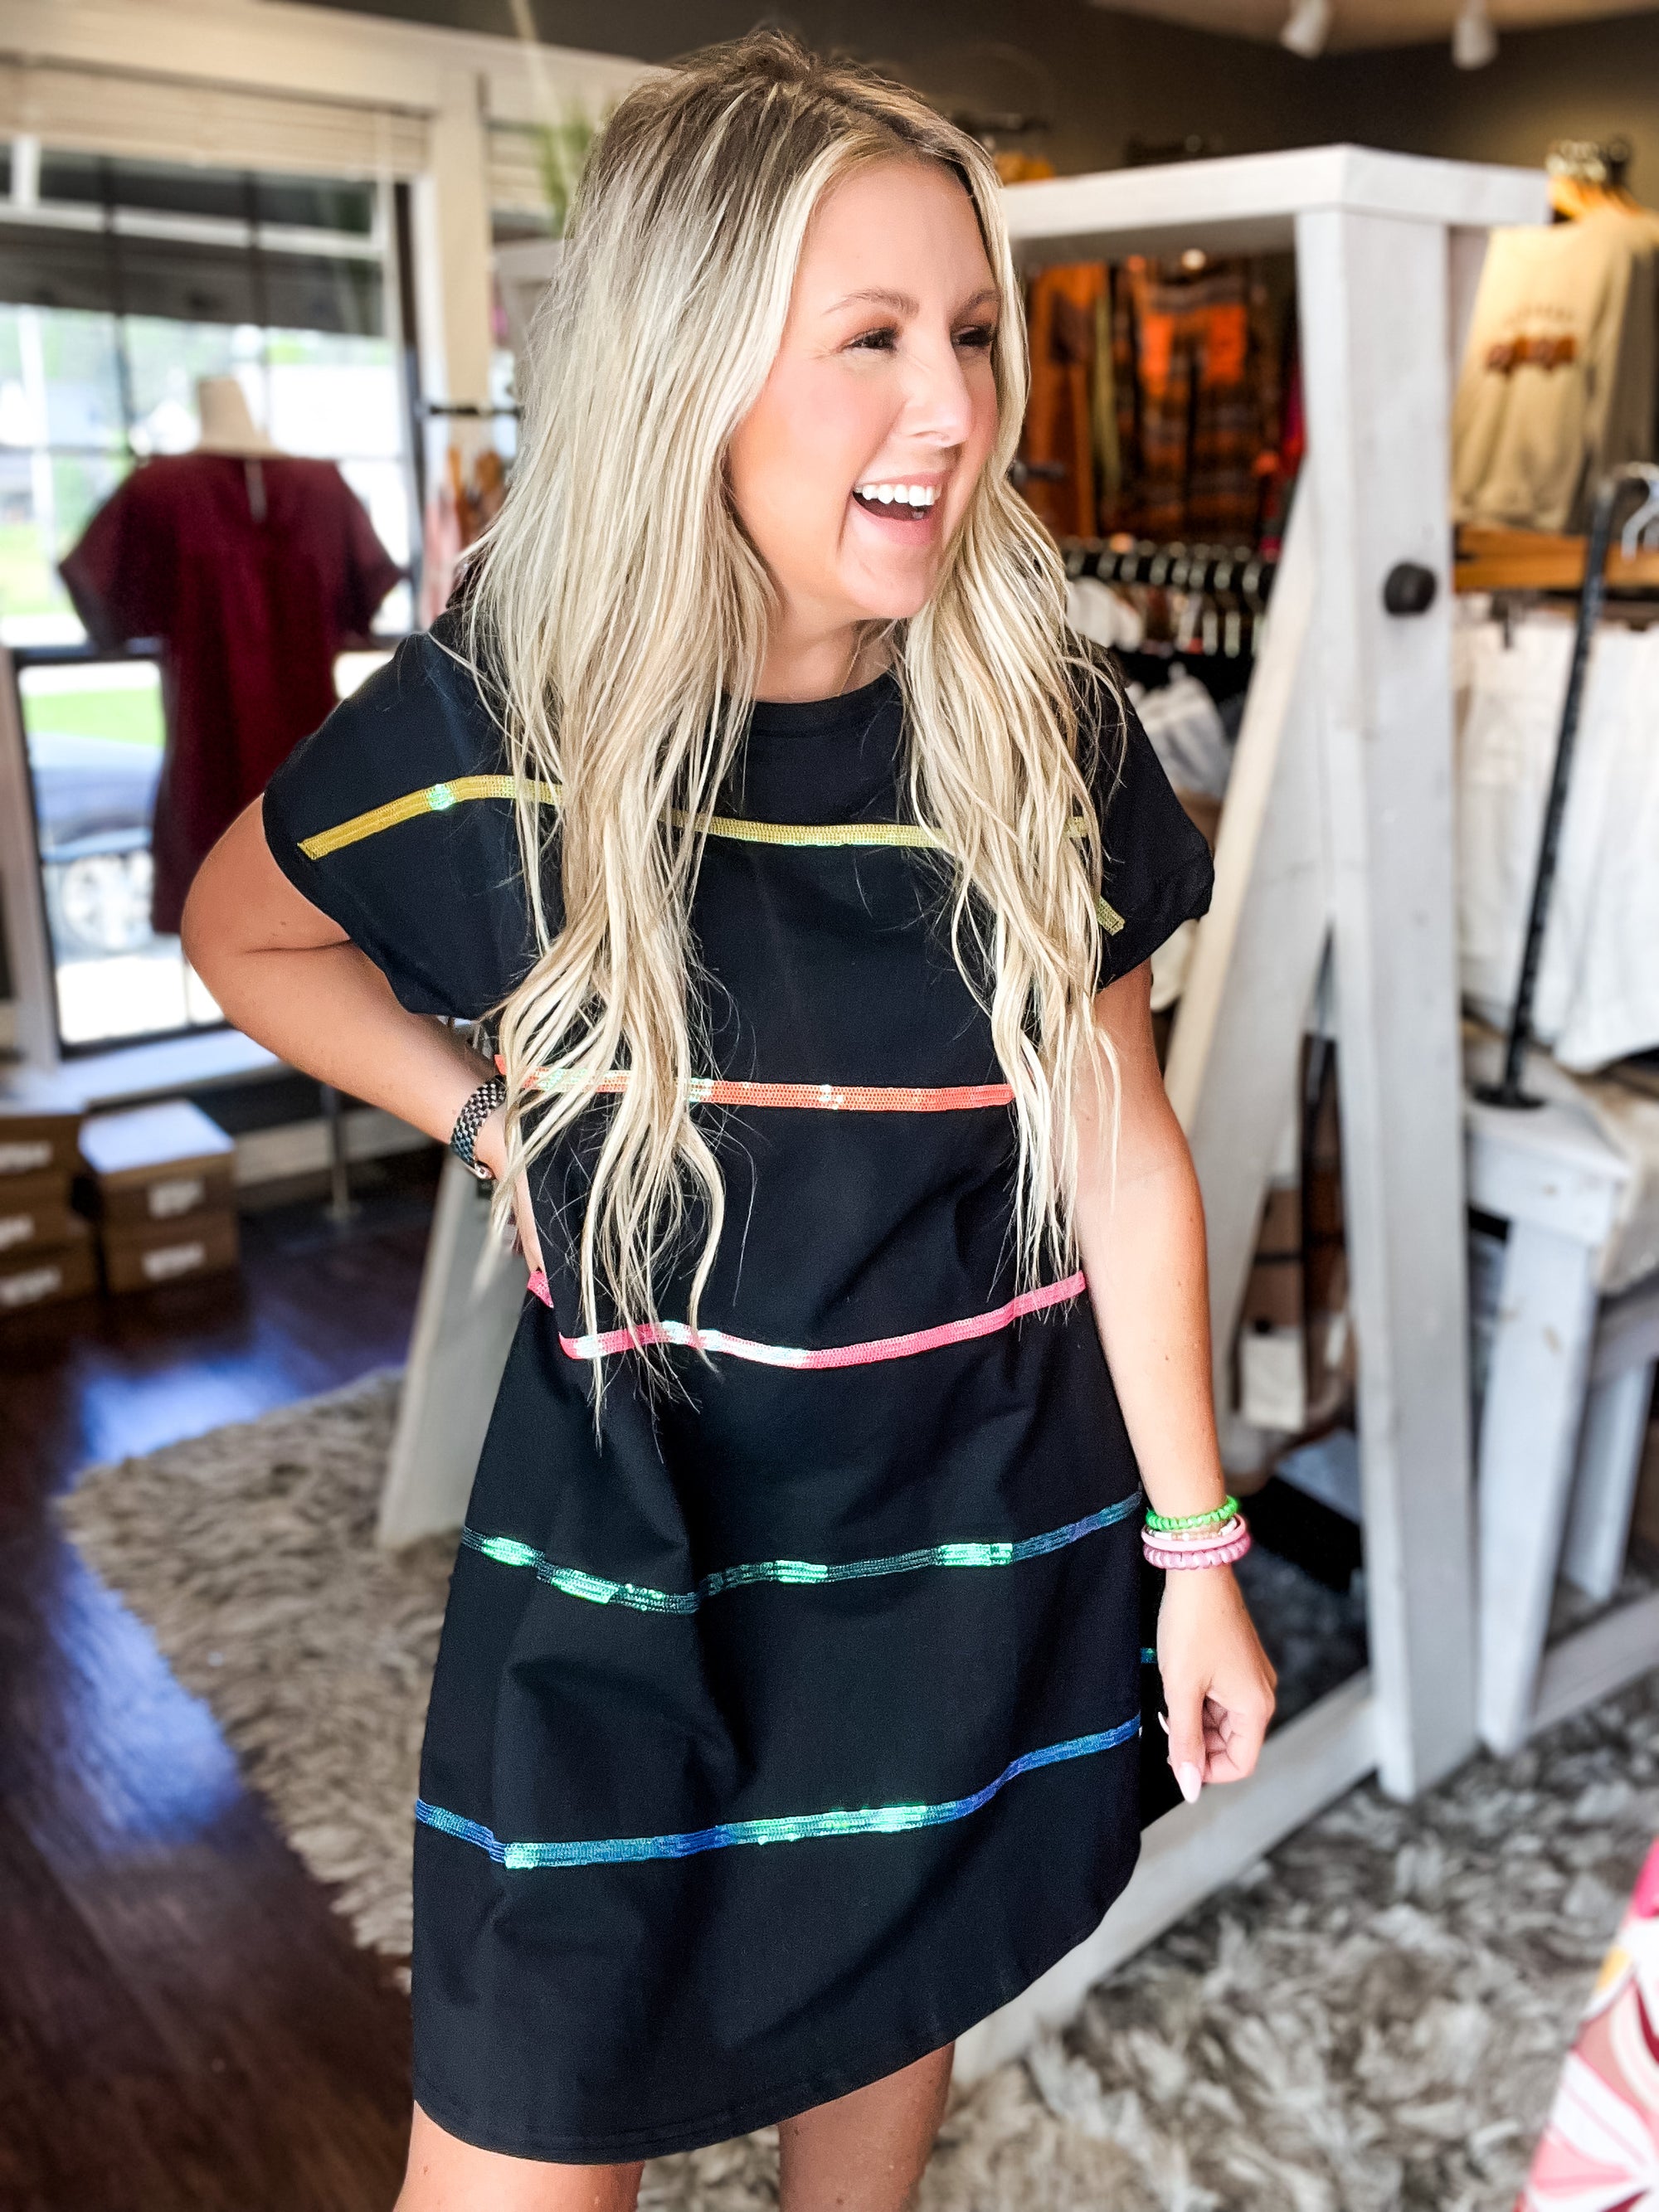 Let Your Style Shine Rainbow Sequin Stripe Dress